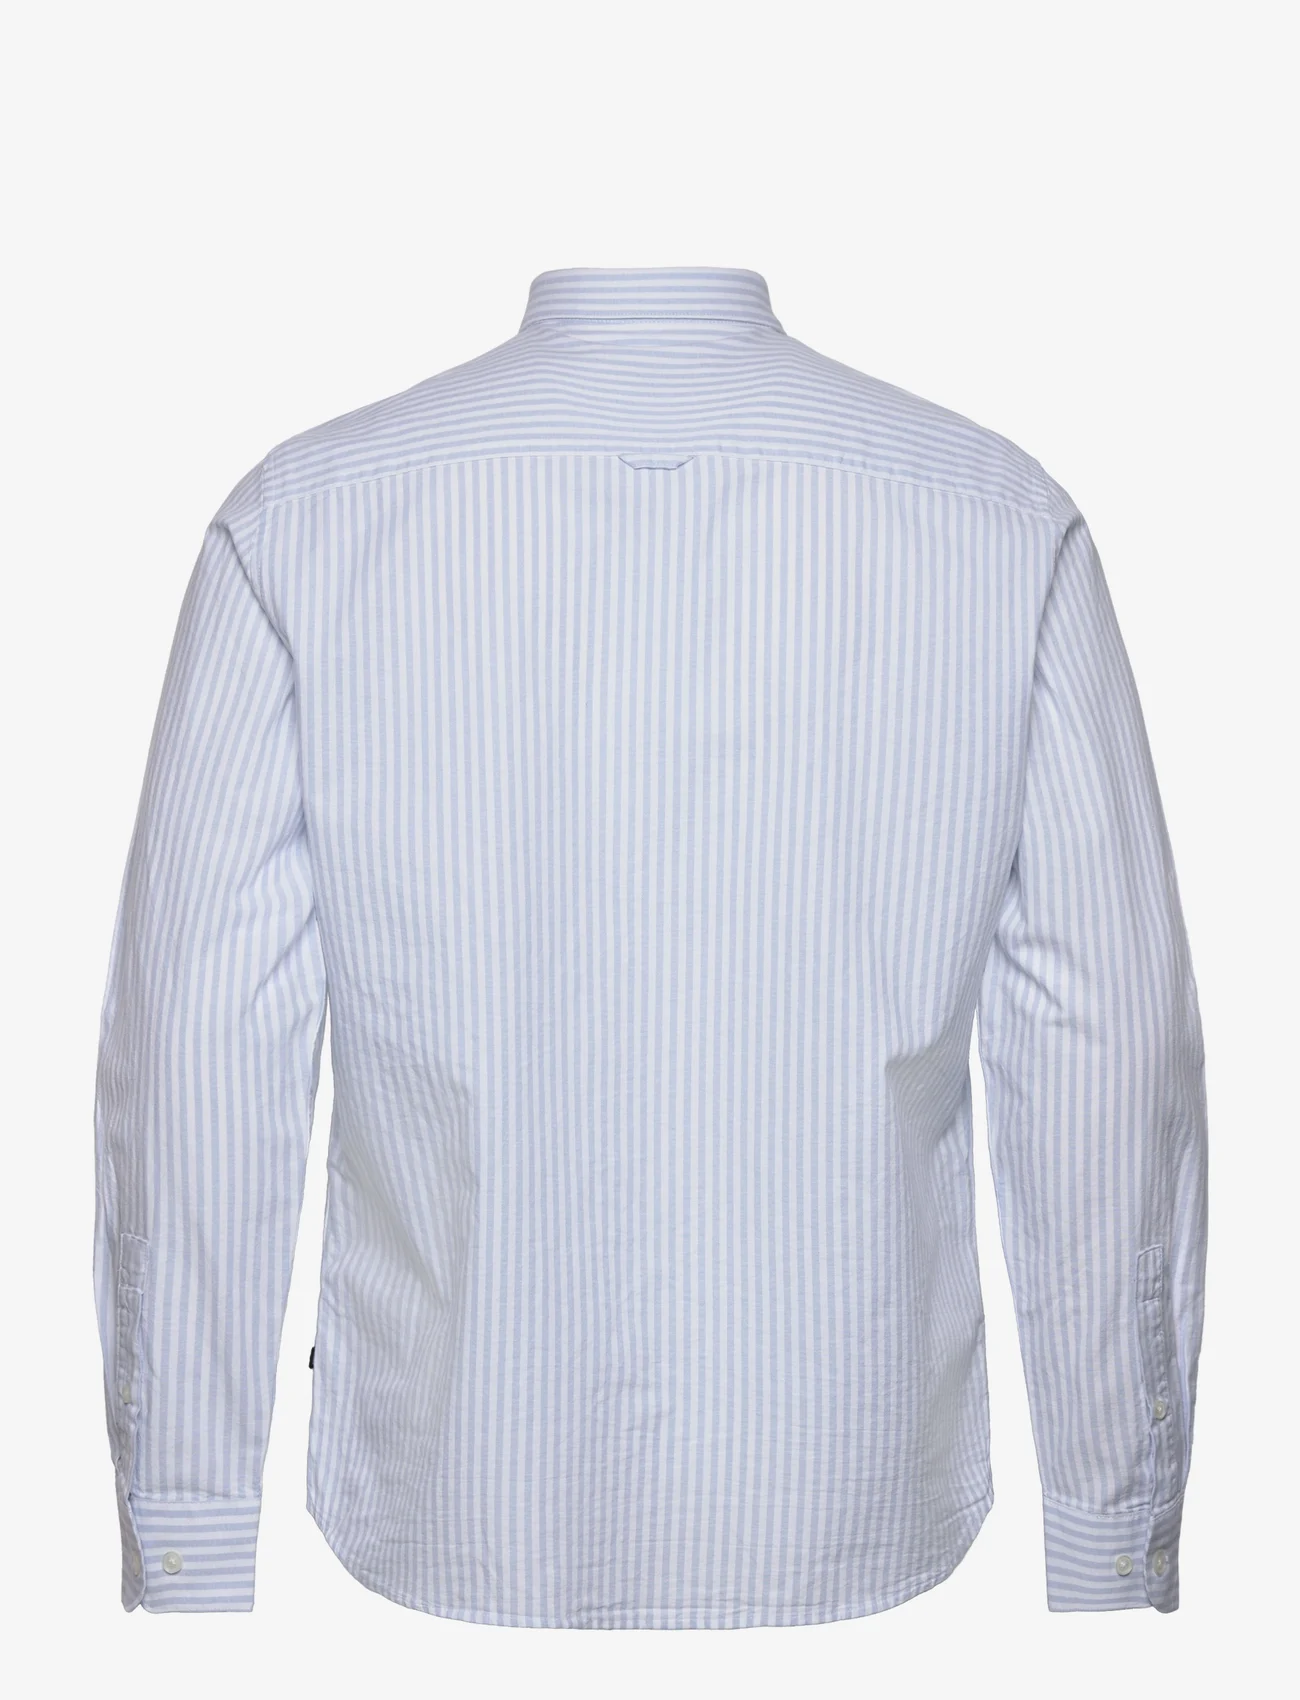 Matinique - MAtrostol BD - dalykinio stiliaus marškiniai - white - 1